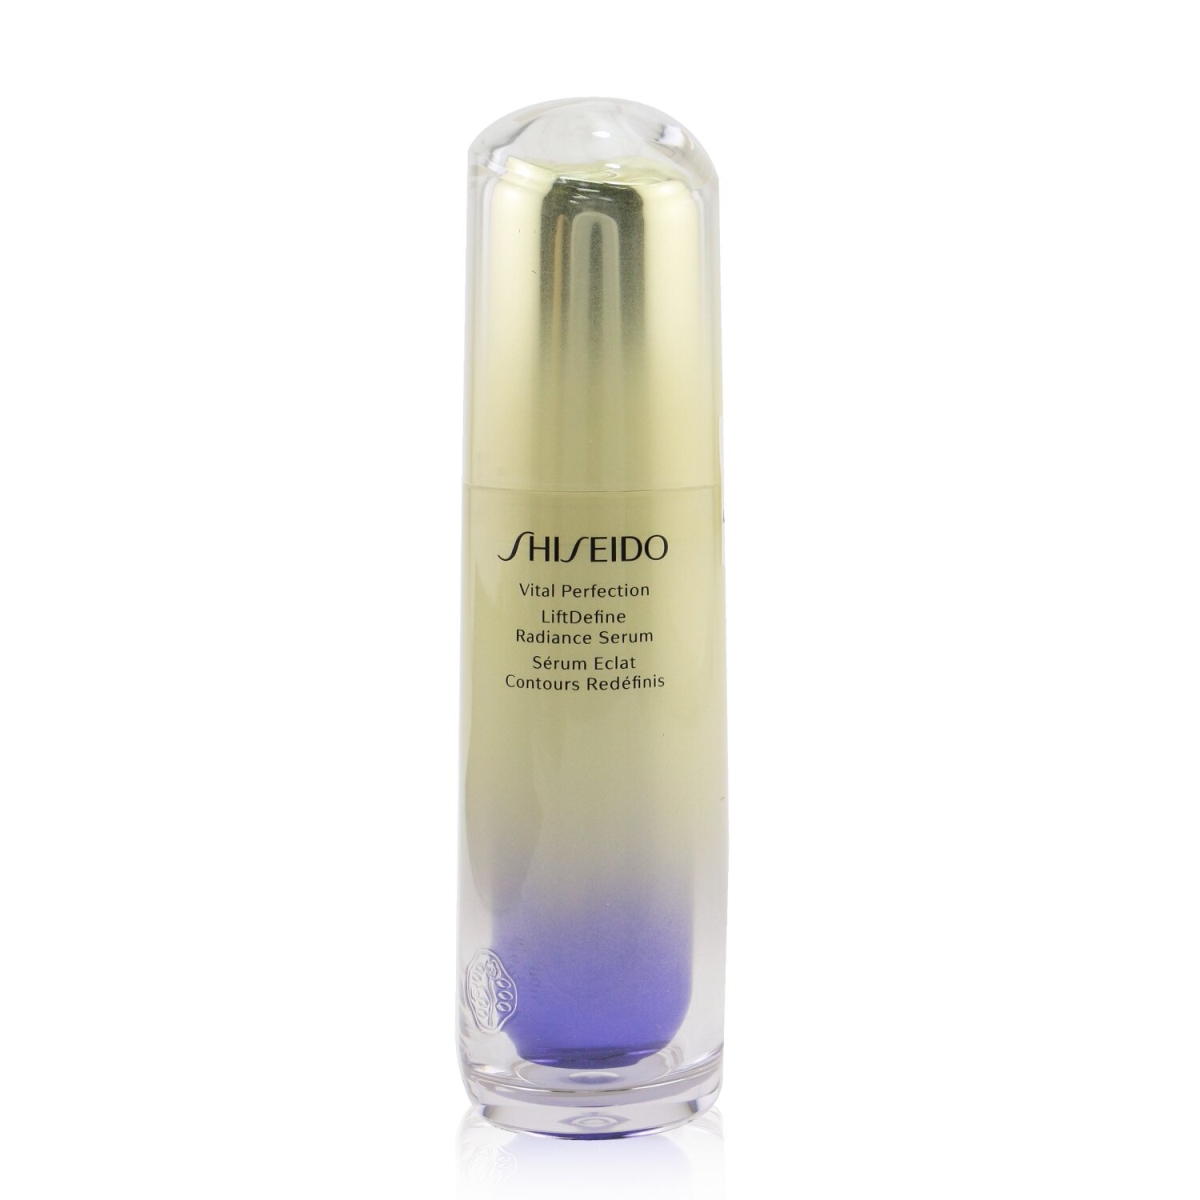 Picture of Shiseido 263119 1.3 oz Vital Perfection LiftDefine Radiance Serum